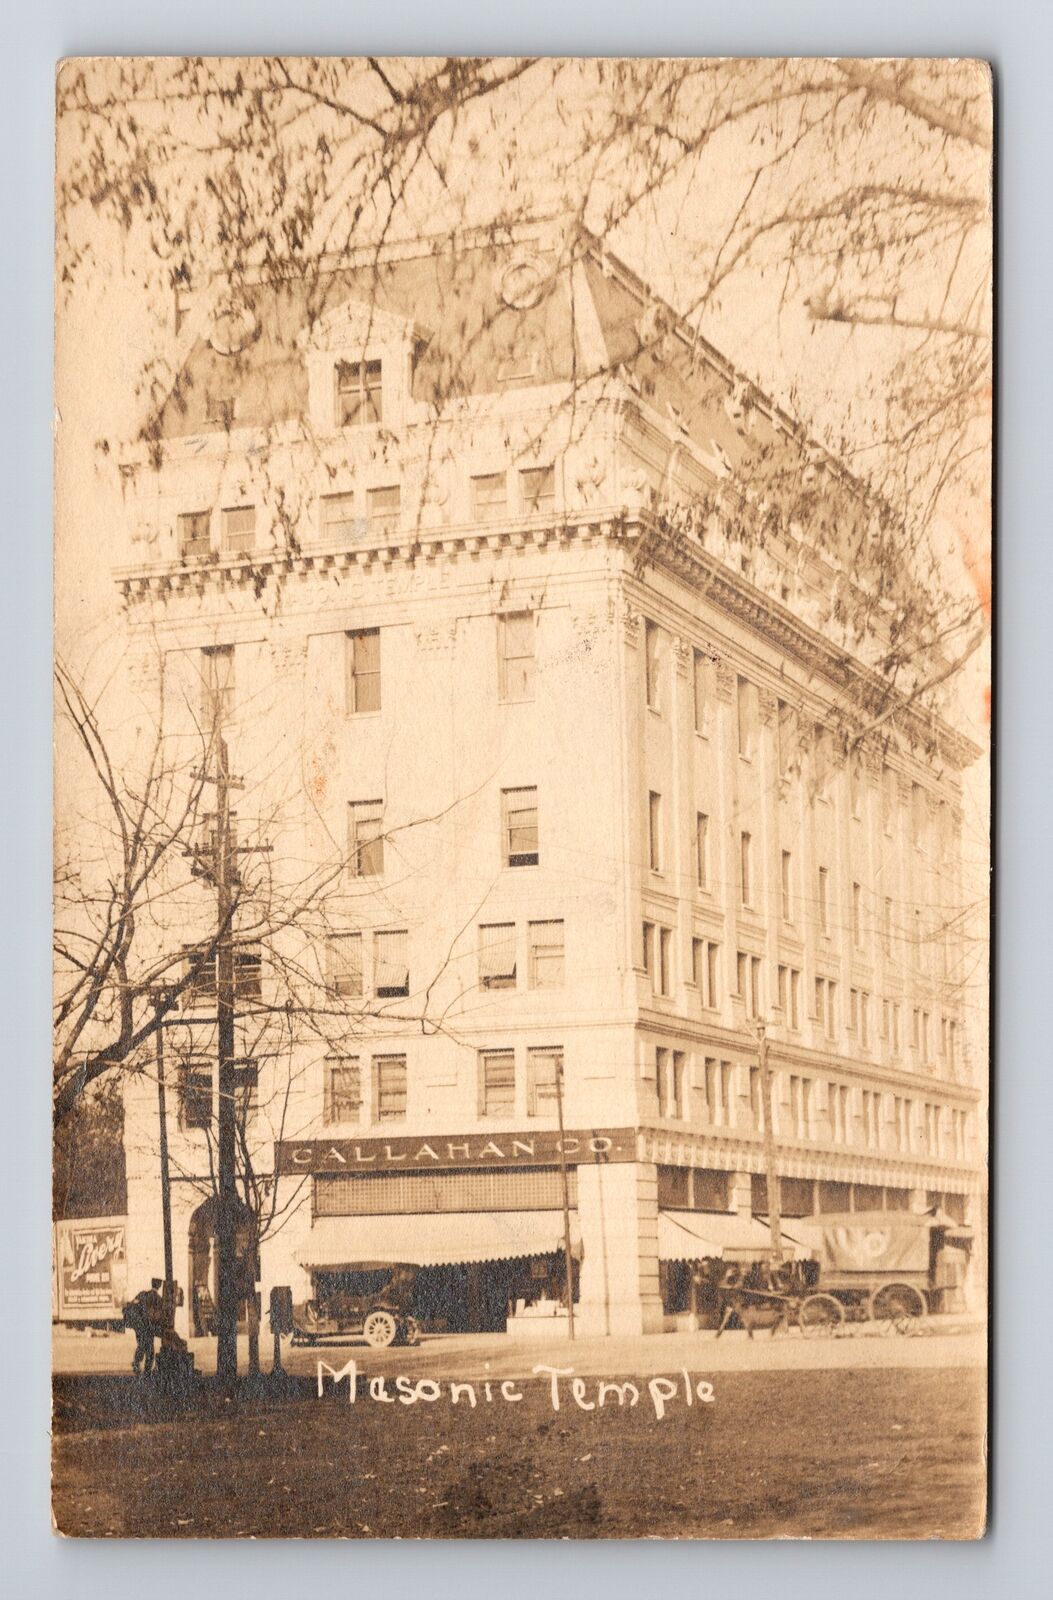 Yakima WA-Washington RPPC, Masonic Temple, Callahan Co. Vintage c1910 Postcard